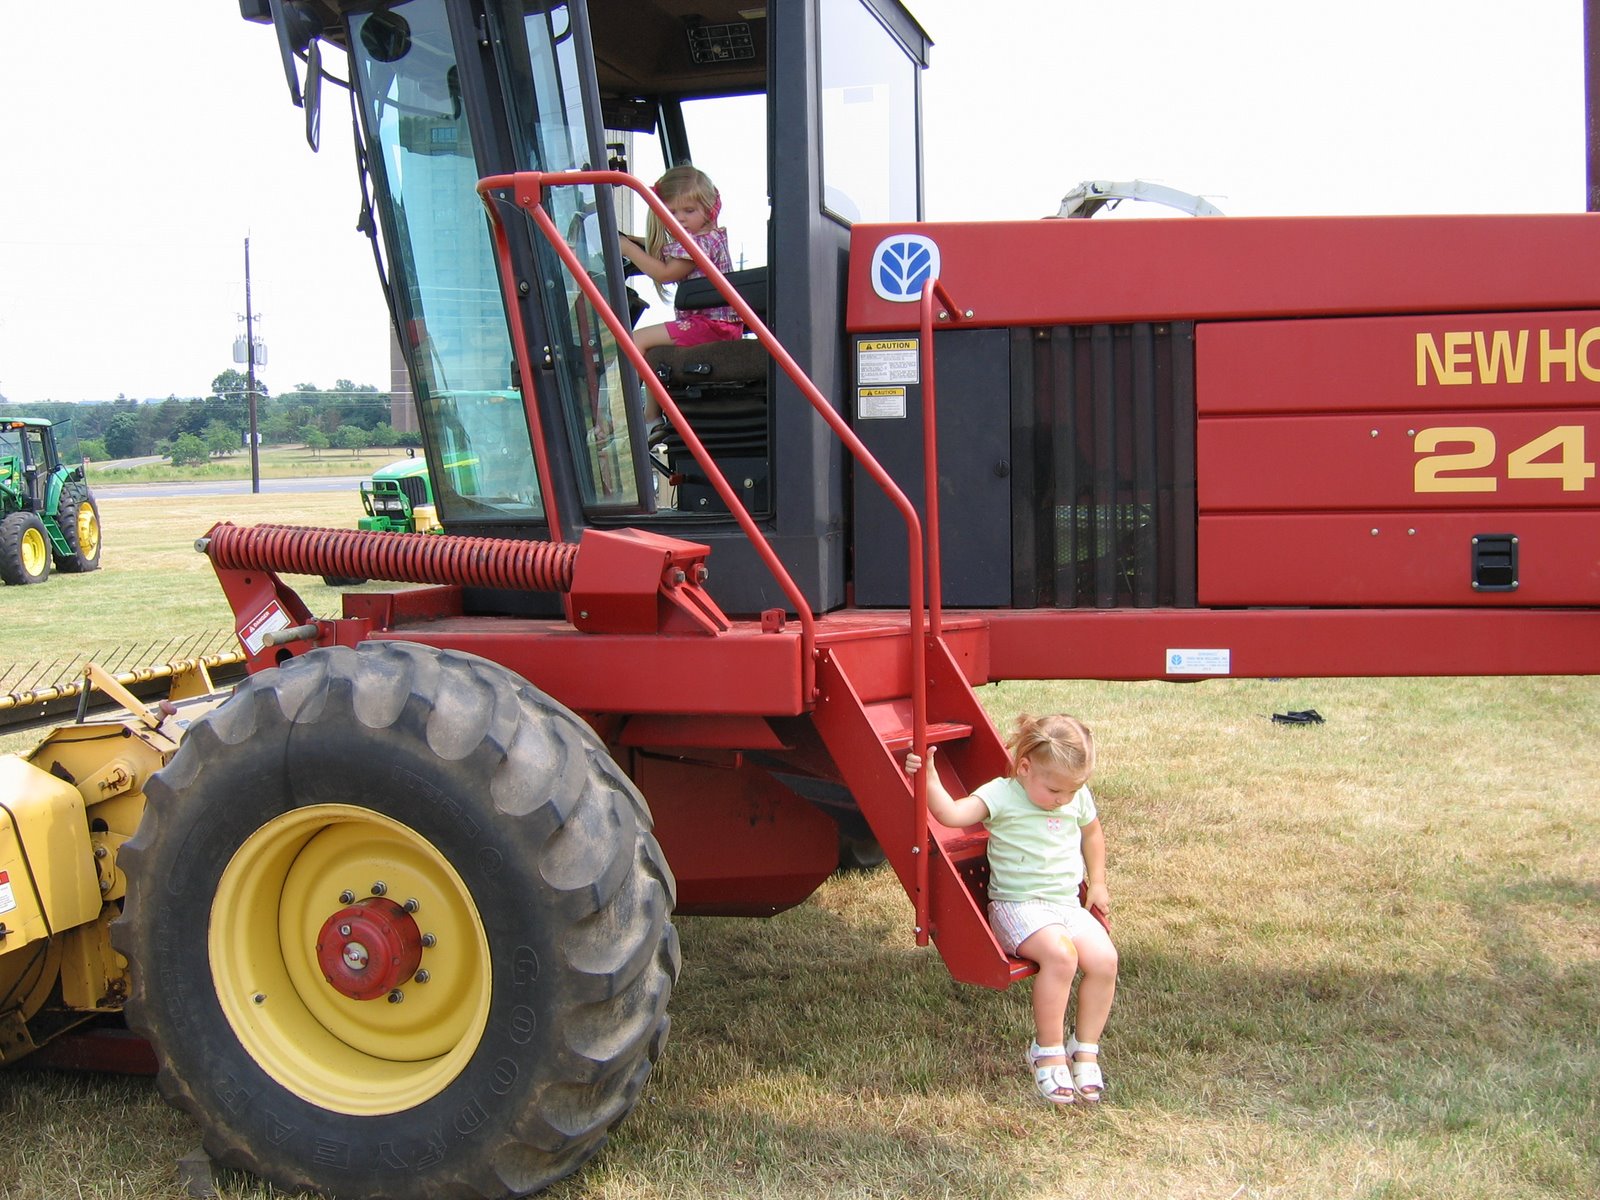 [Little+girls+on+big+tractor.JPG]